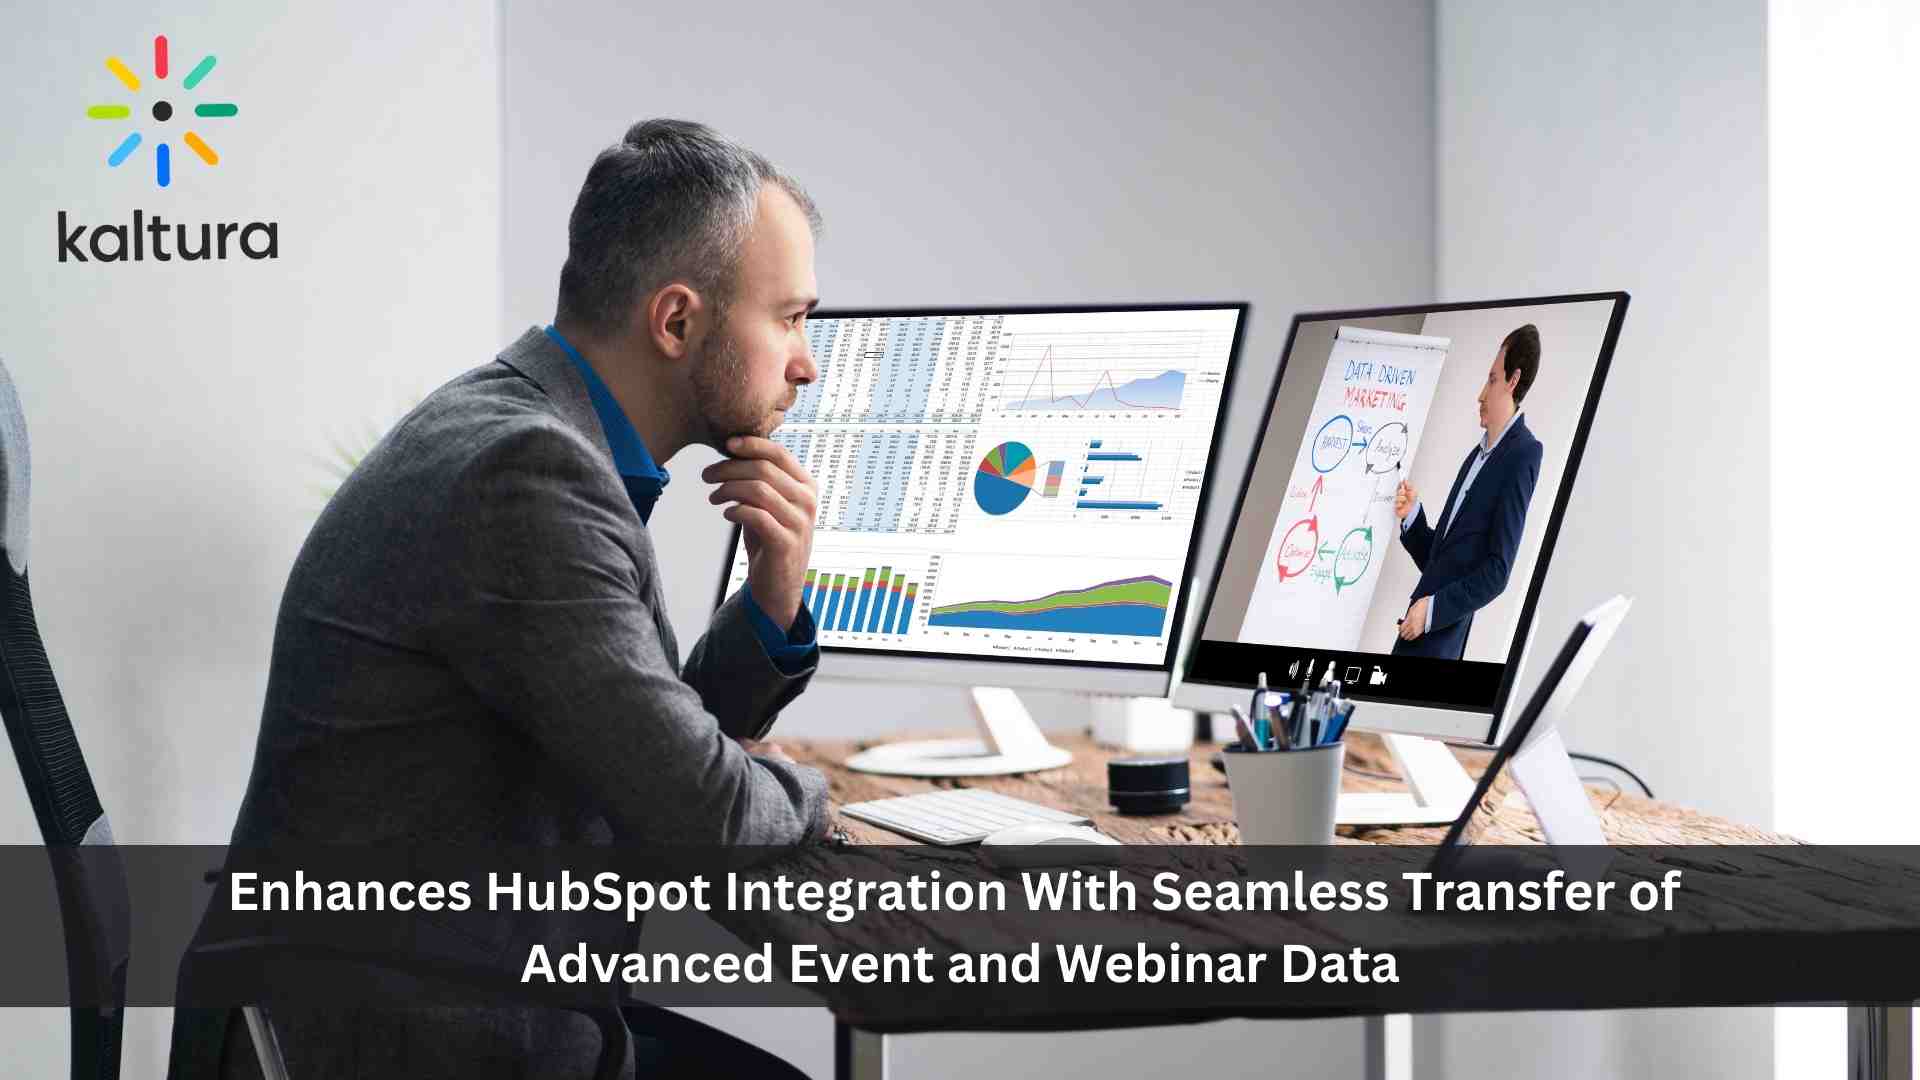 Kaltura Enhances HubSpot Integration With Seamless Transfer of Advanced Event and Webinar Data